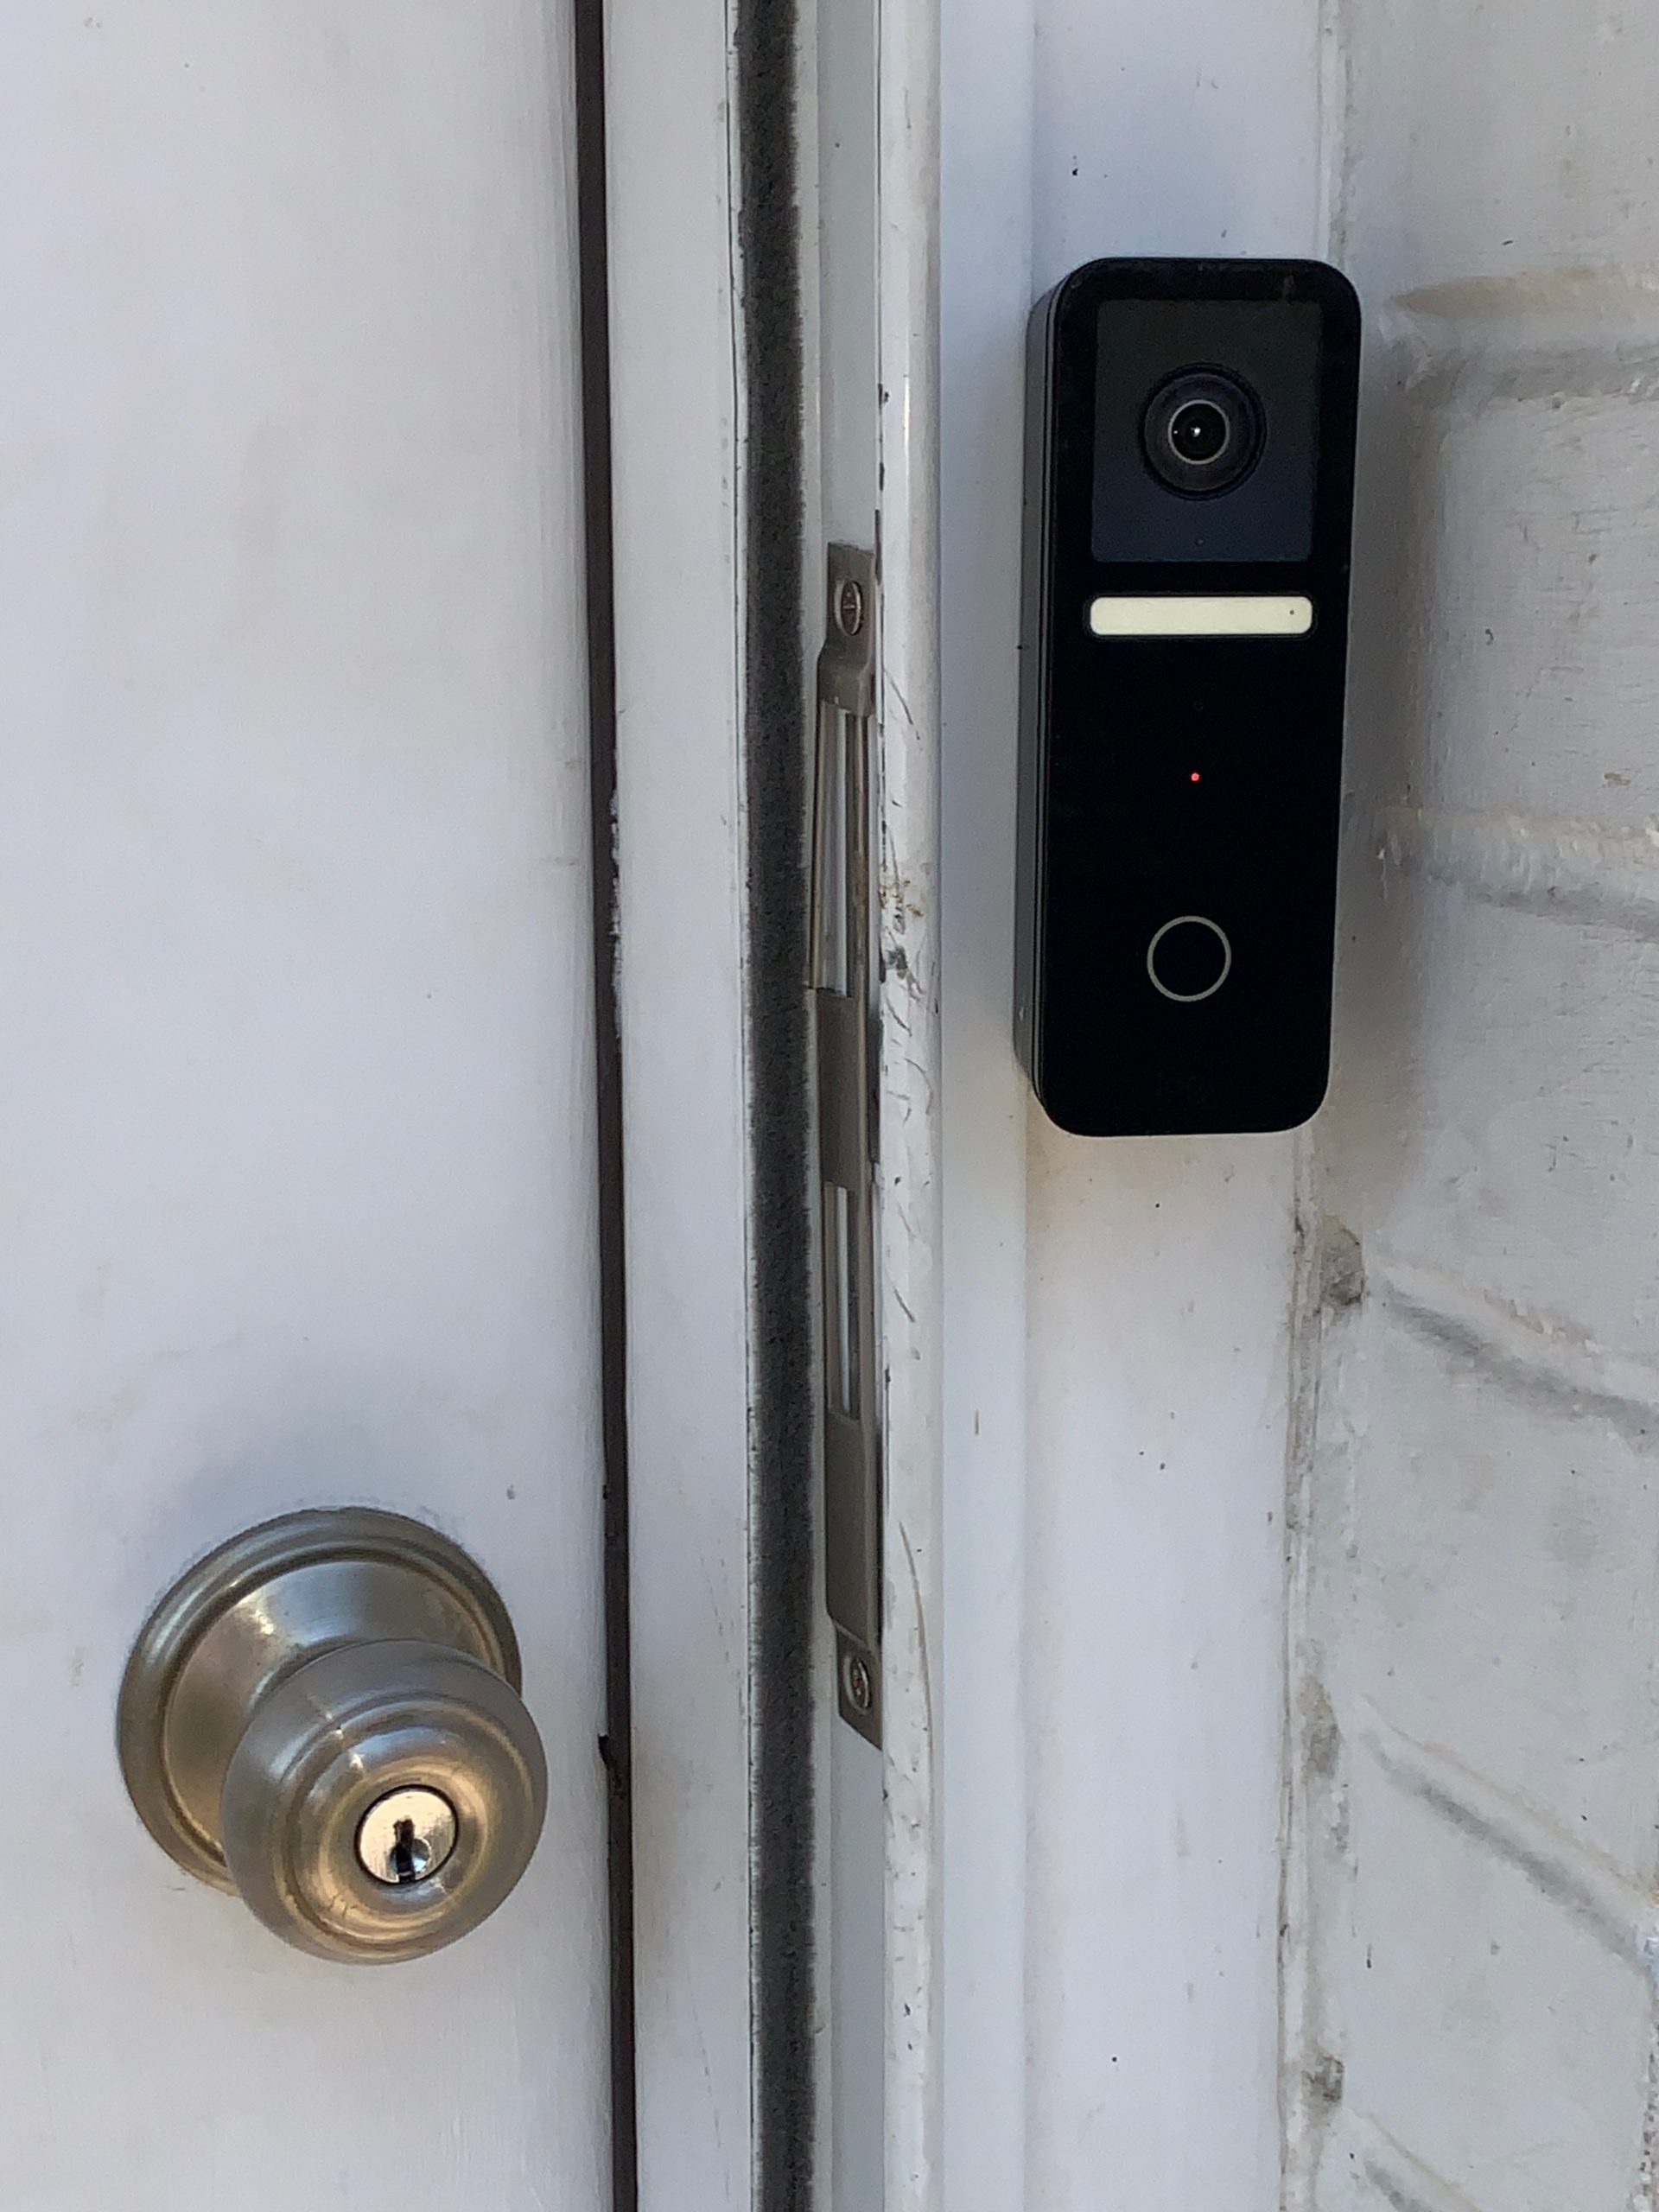 Logitech Circle View Video Doorbell Tech Support is Outstanding